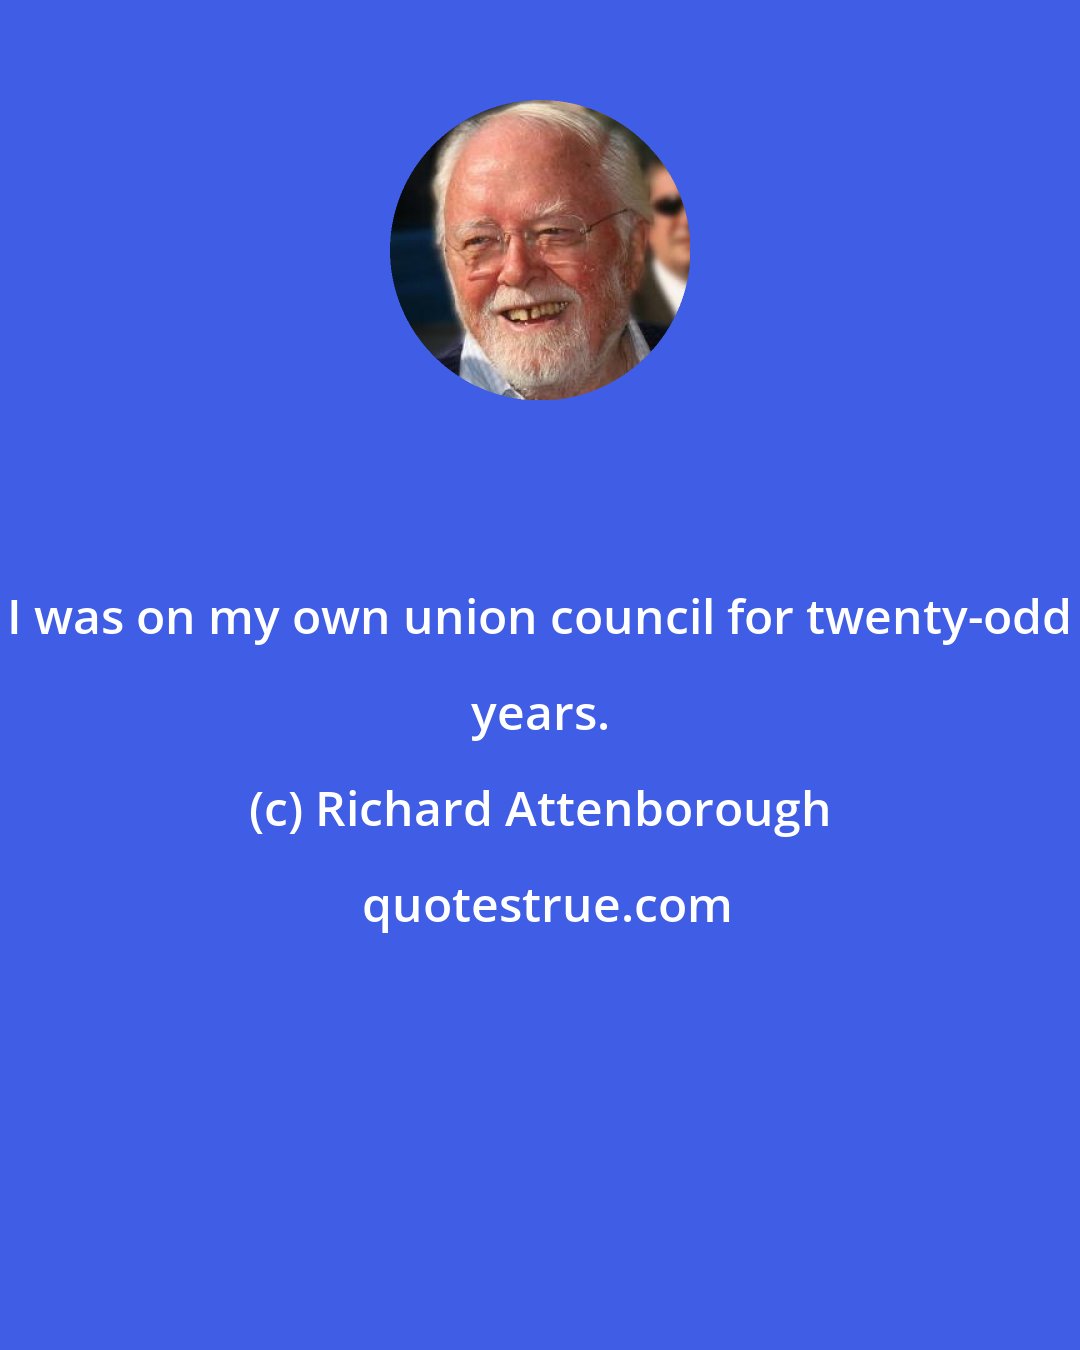 Richard Attenborough: I was on my own union council for twenty-odd years.